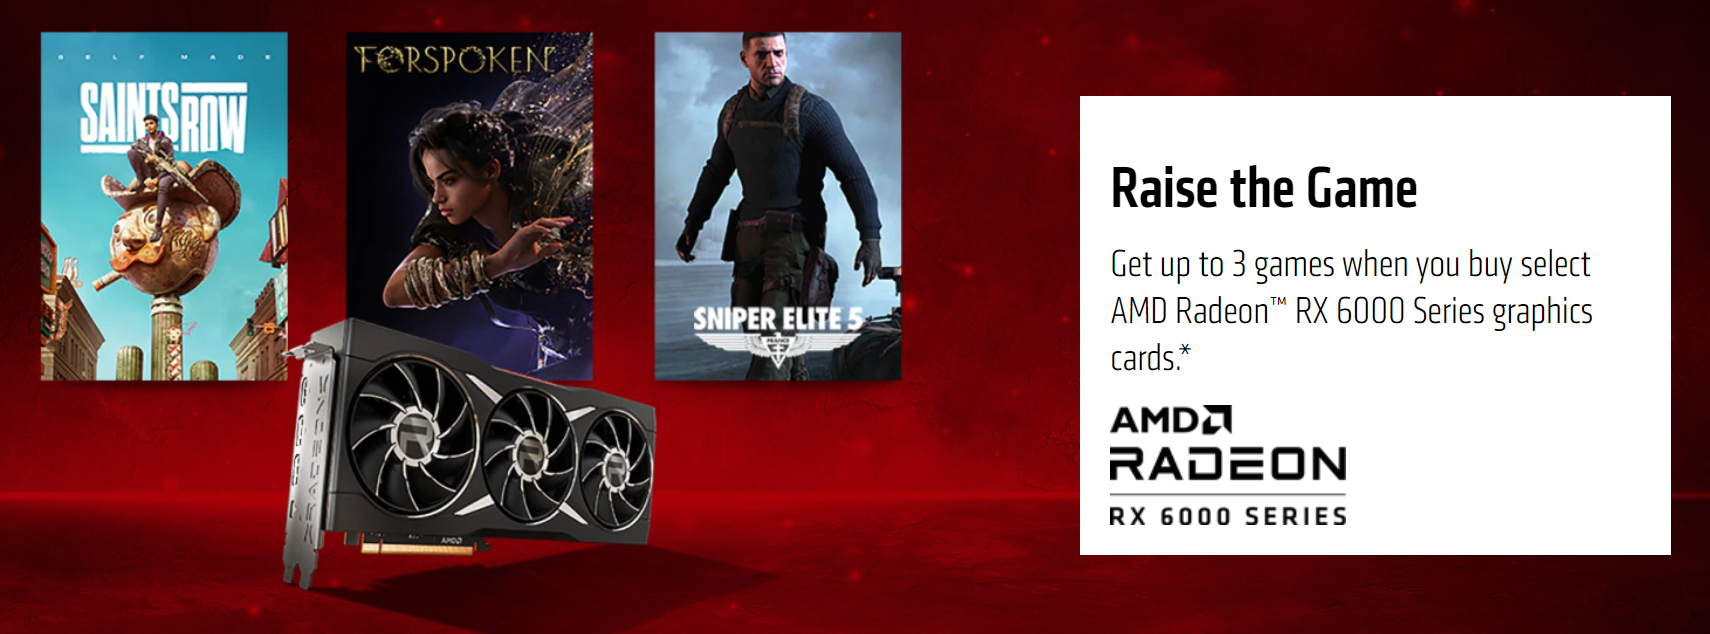 amd bundle  raise the game radeon rx 6000 series AMD เปิดตัวชุดเกมบันเดิล AMD Radeon Raise the Game Bundle สำหรับผู้ที่ซื้อผลิตภัณธ์กราฟิกการ์ด AMD Radeon RX 6000 Series